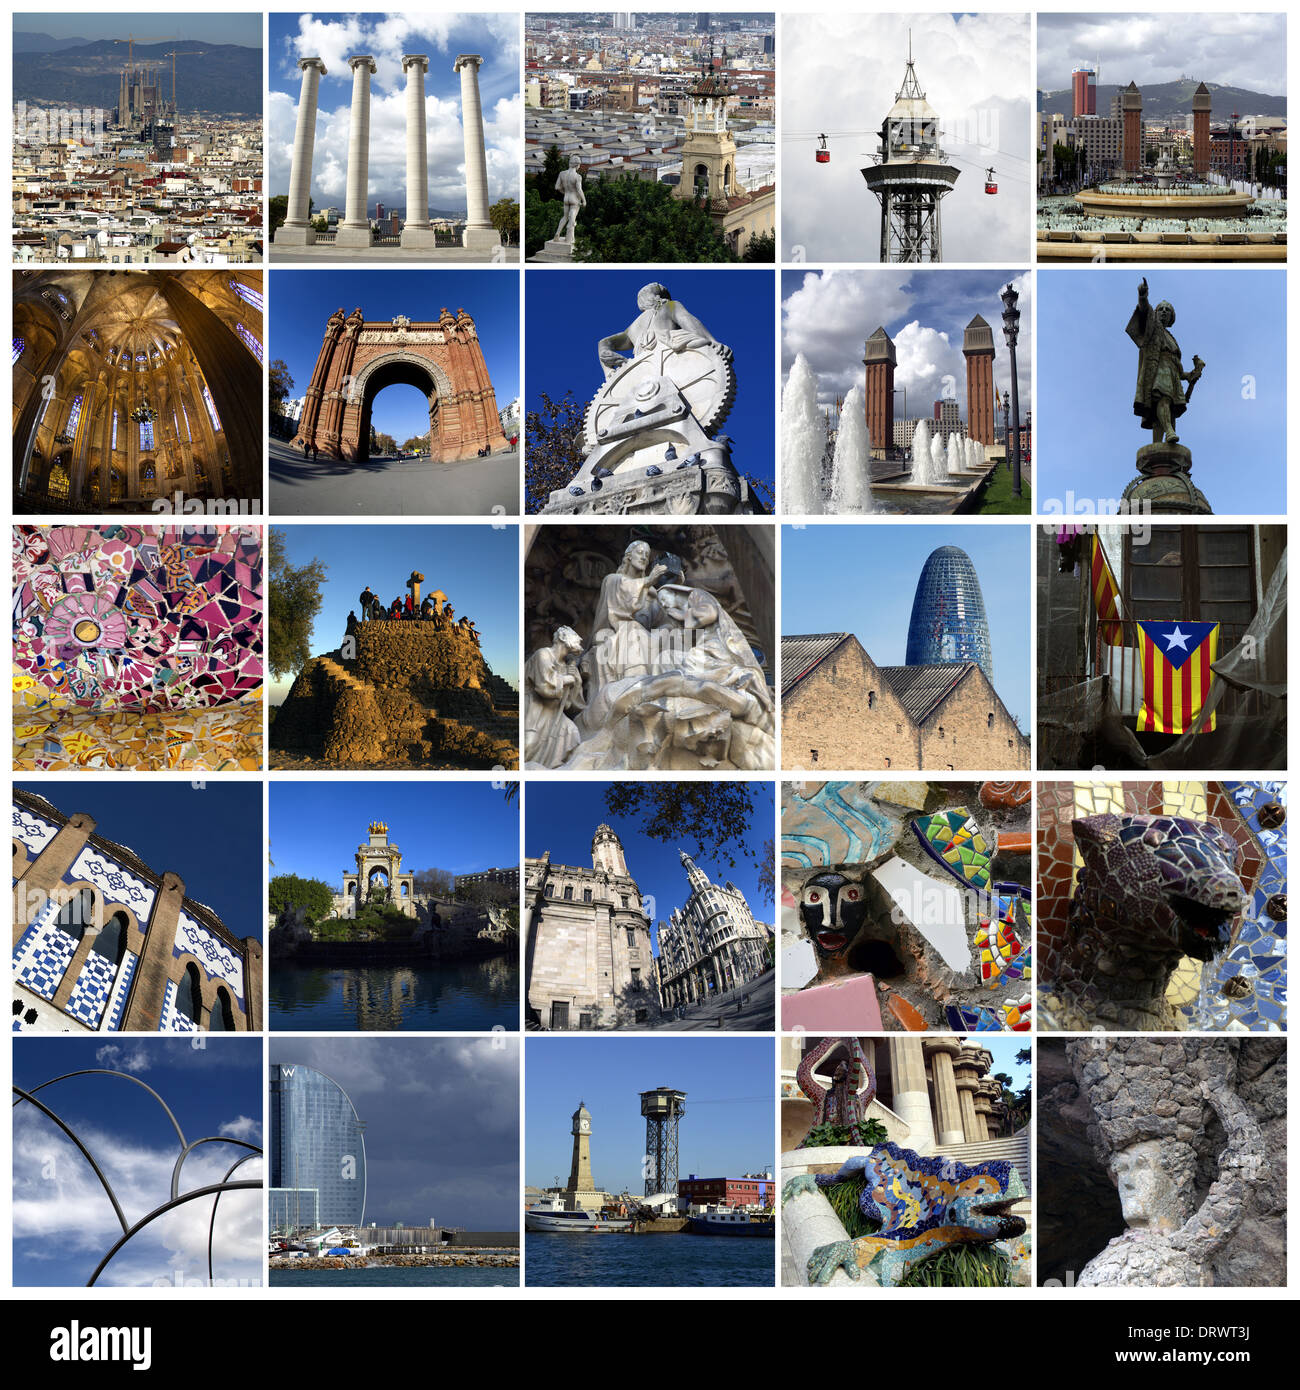 of Barcelona,collage Stock Photo - Alamy